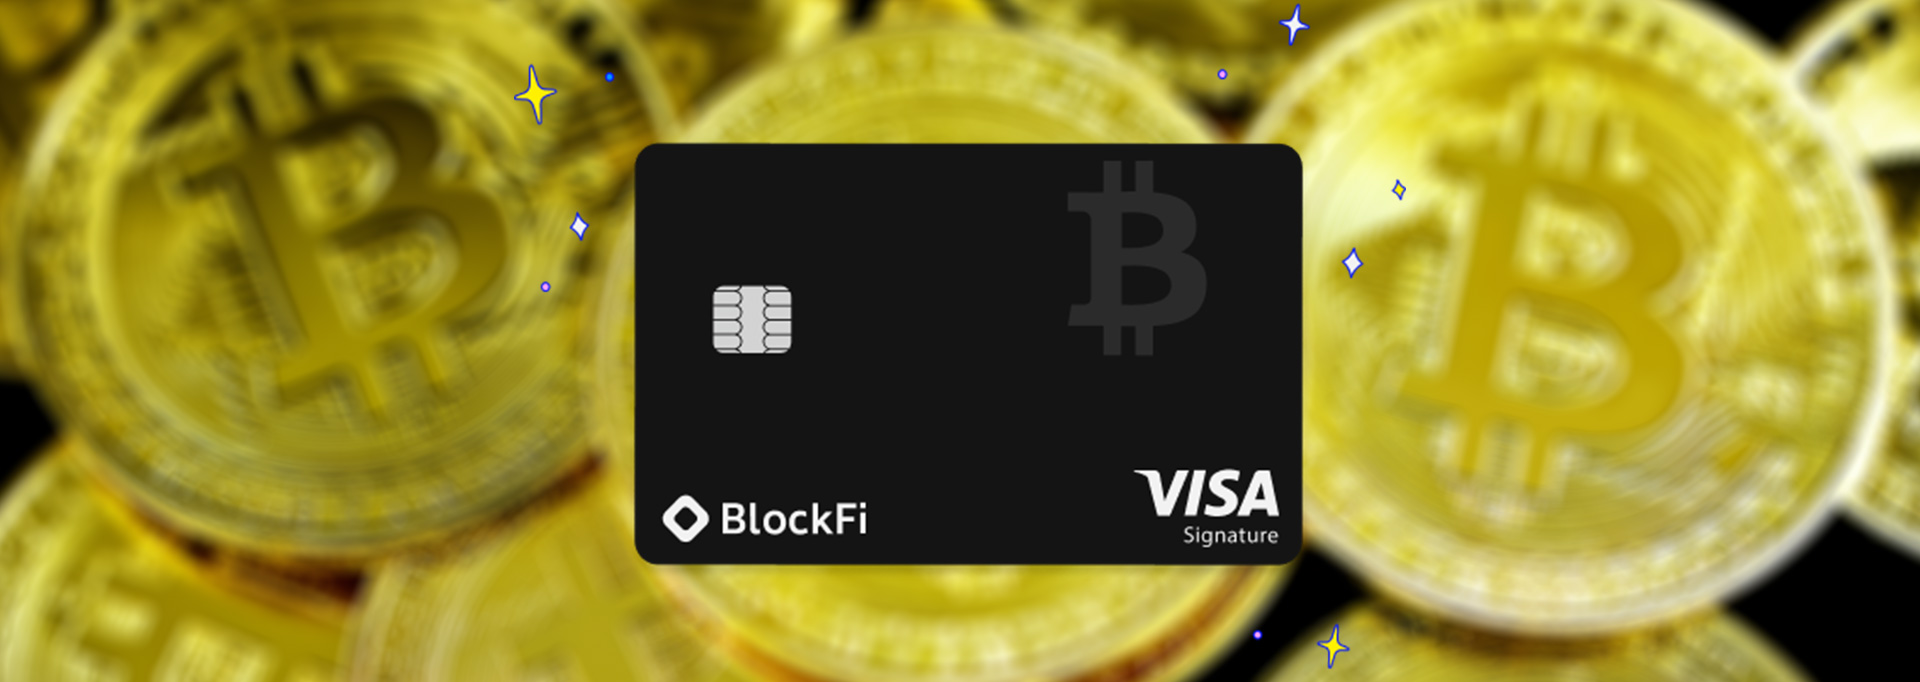 BlockFi Visa card